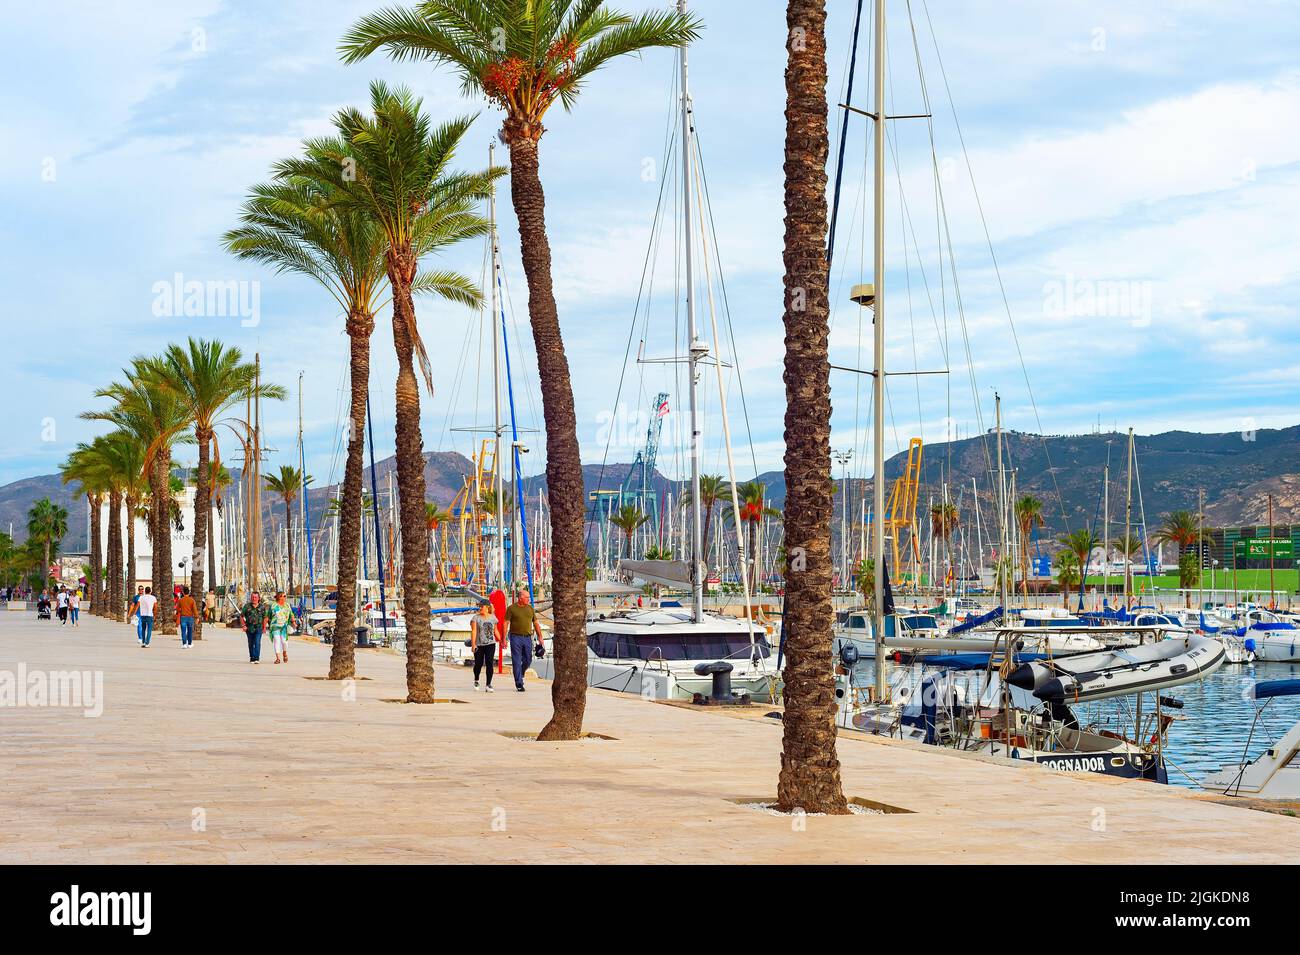 CARTAGENA, SPAIN - NOVEMBER 1, 2021: People walking at embankment with palms by marina with yachts, Cartagena, Spain Stock Photo